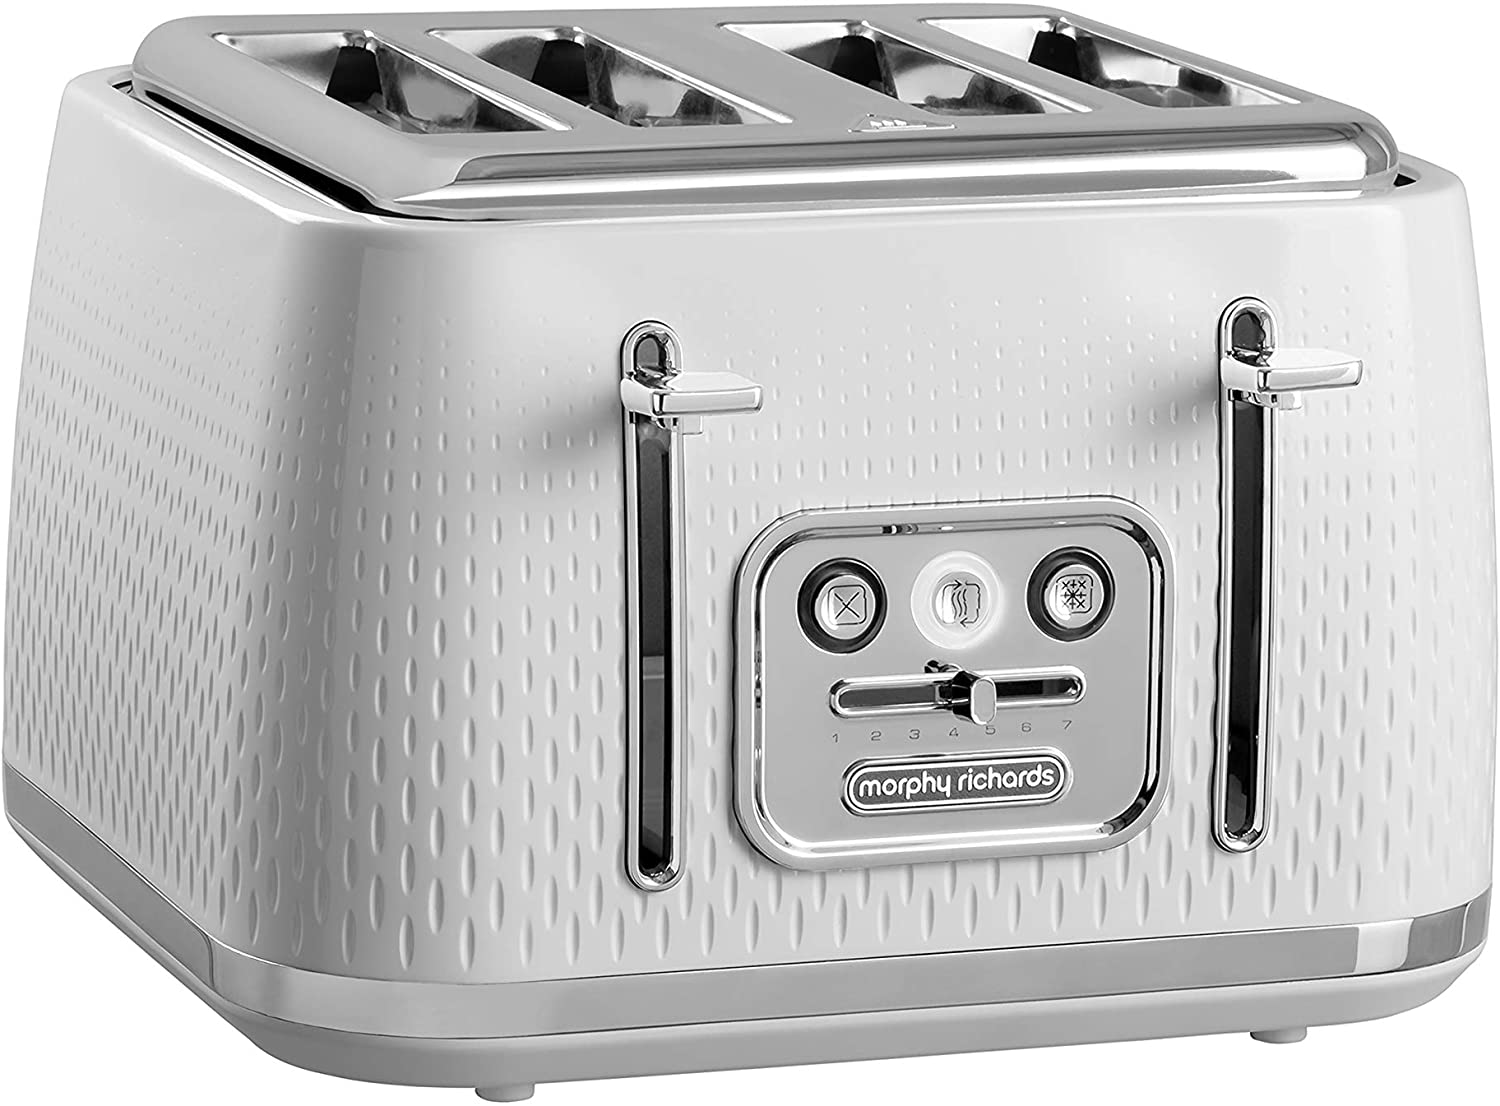 Morphy Richards Toaster - Black 243010 - Cream 243011 - White 243012